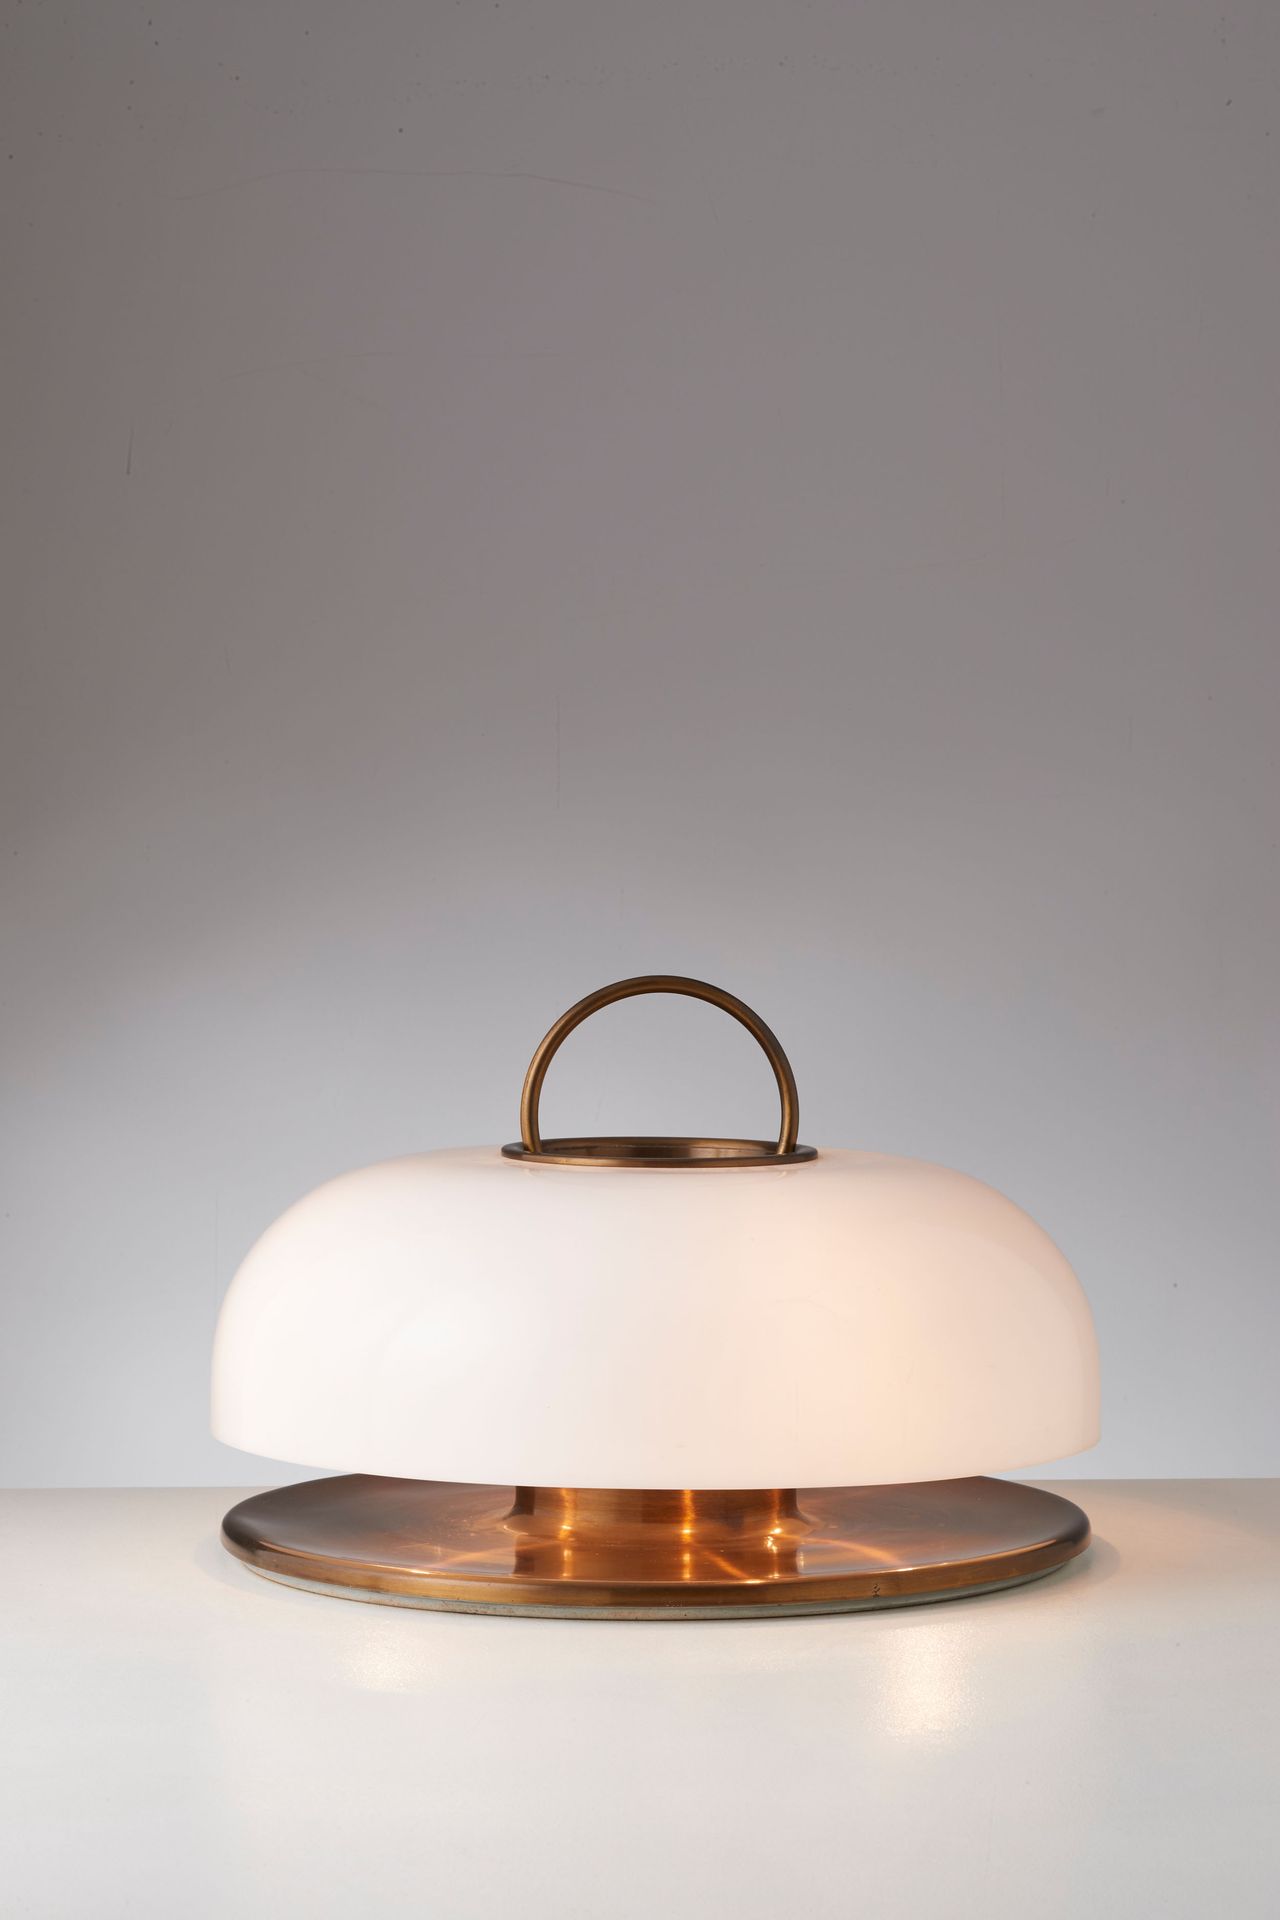 Manifattura Italiana Brass table lamp, perspex opaline. Italy 1960s.
Cm 35x50 
A&hellip;